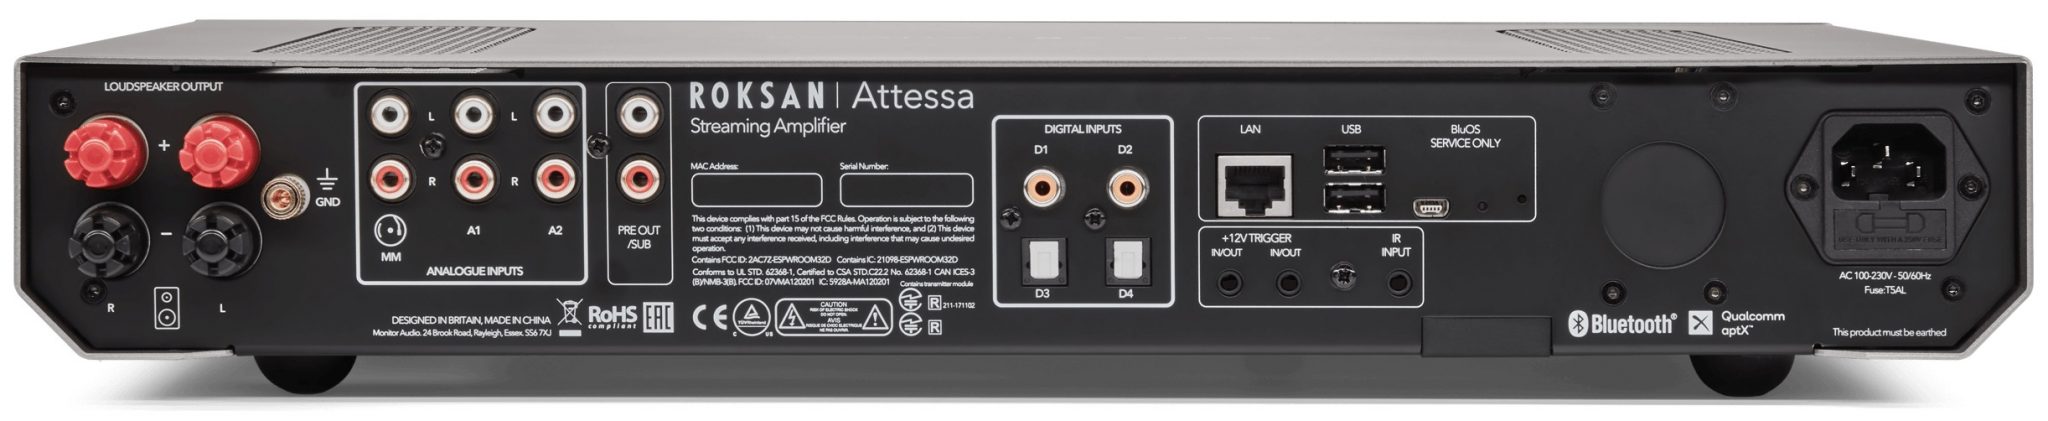 Roksan Attessa Streaming Amp zilver - achterkant - Stereo receiver